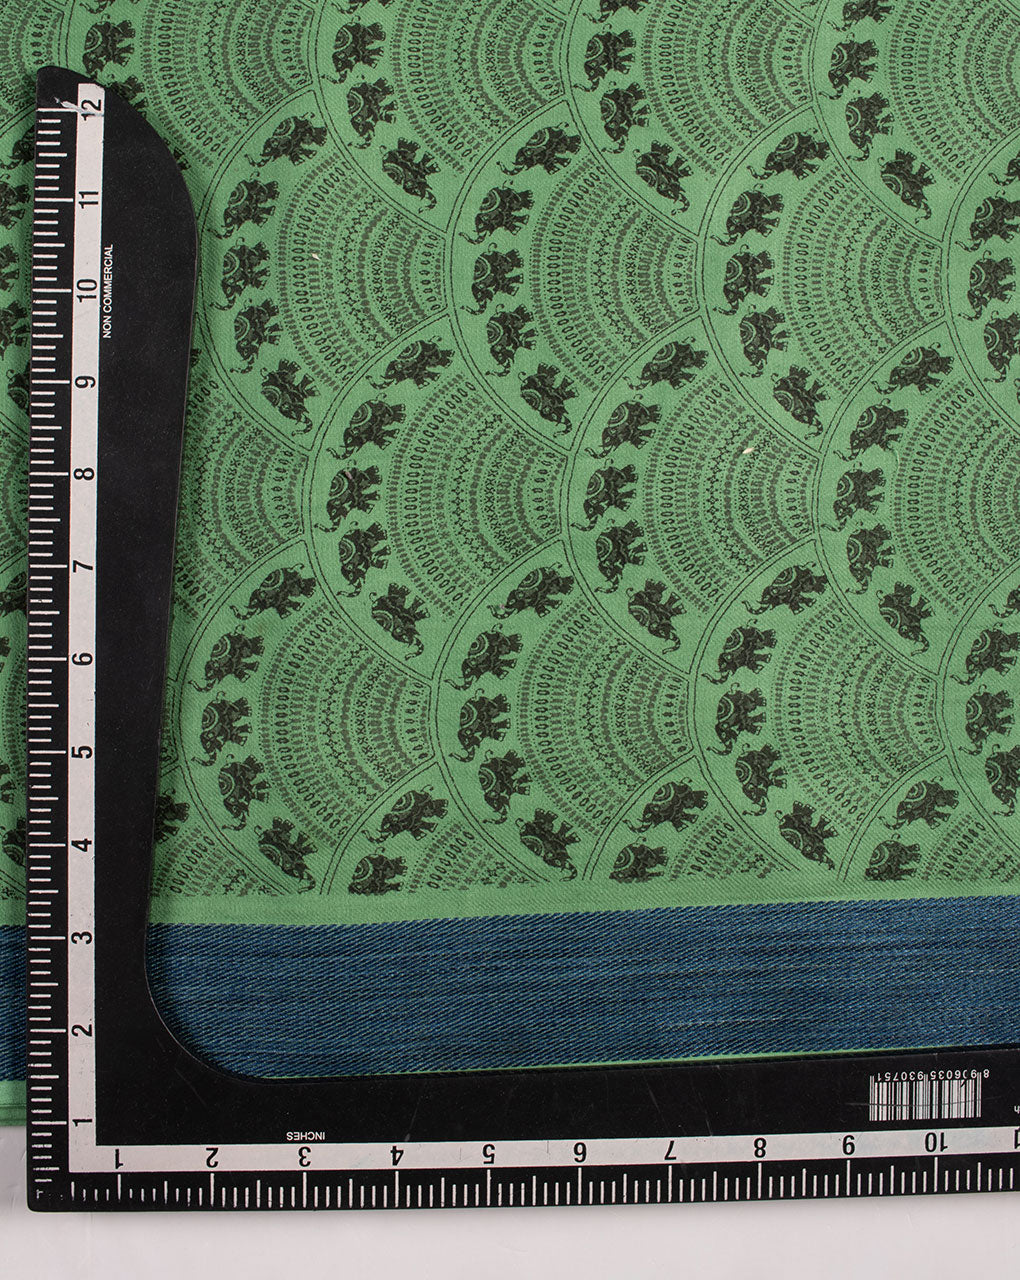 Screen Print Bordered Loom Textured Cotton Fabric - Fabriclore.com